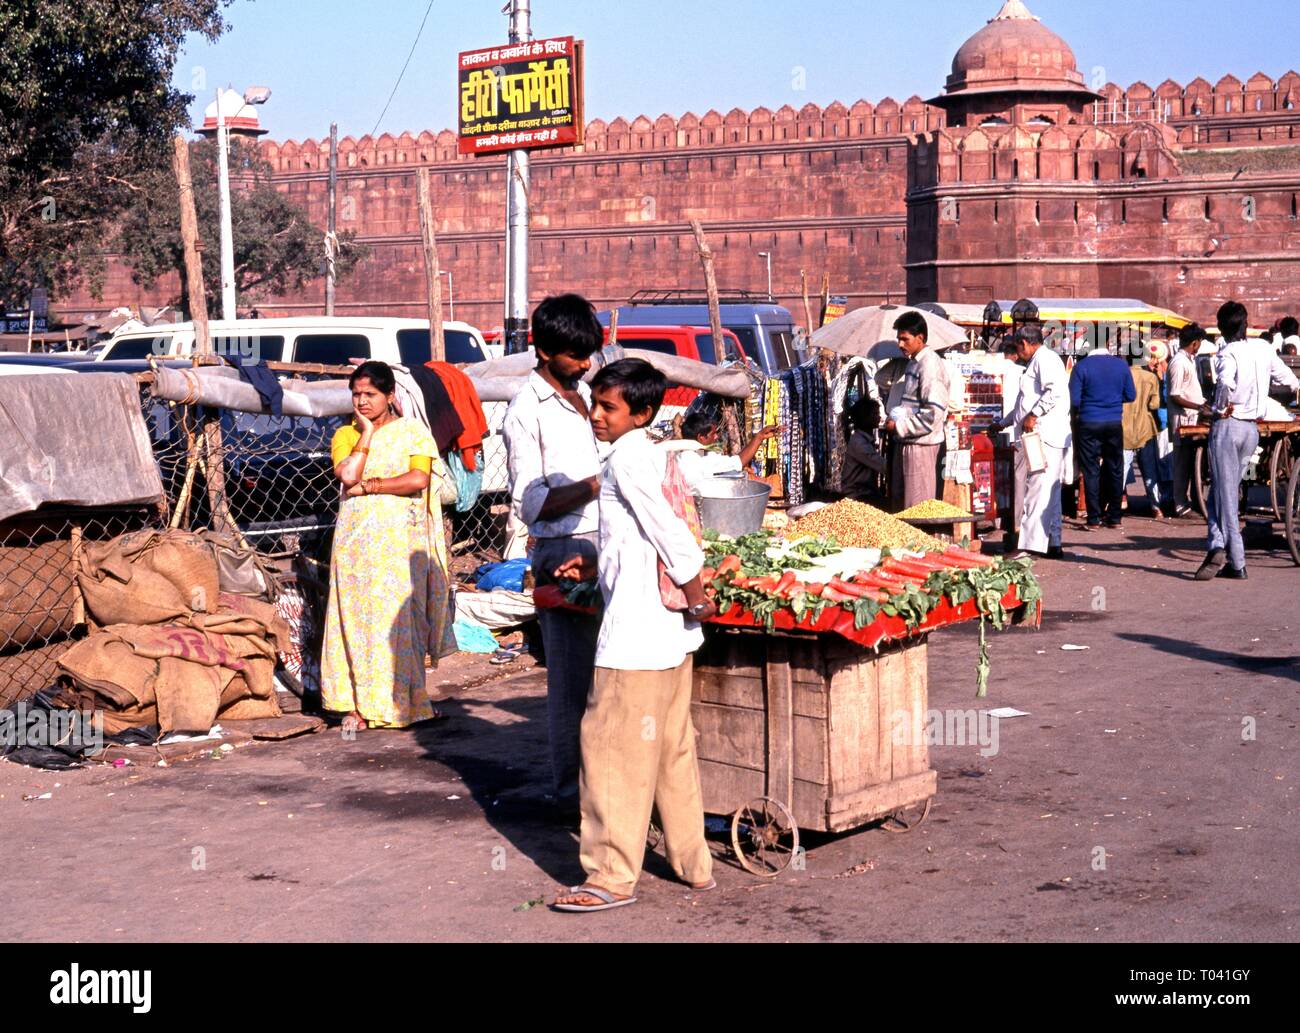 Roadside vegetable stall and seller outside the Red Fort, Delhi, Delhi Union Territory, India. Stock Photo